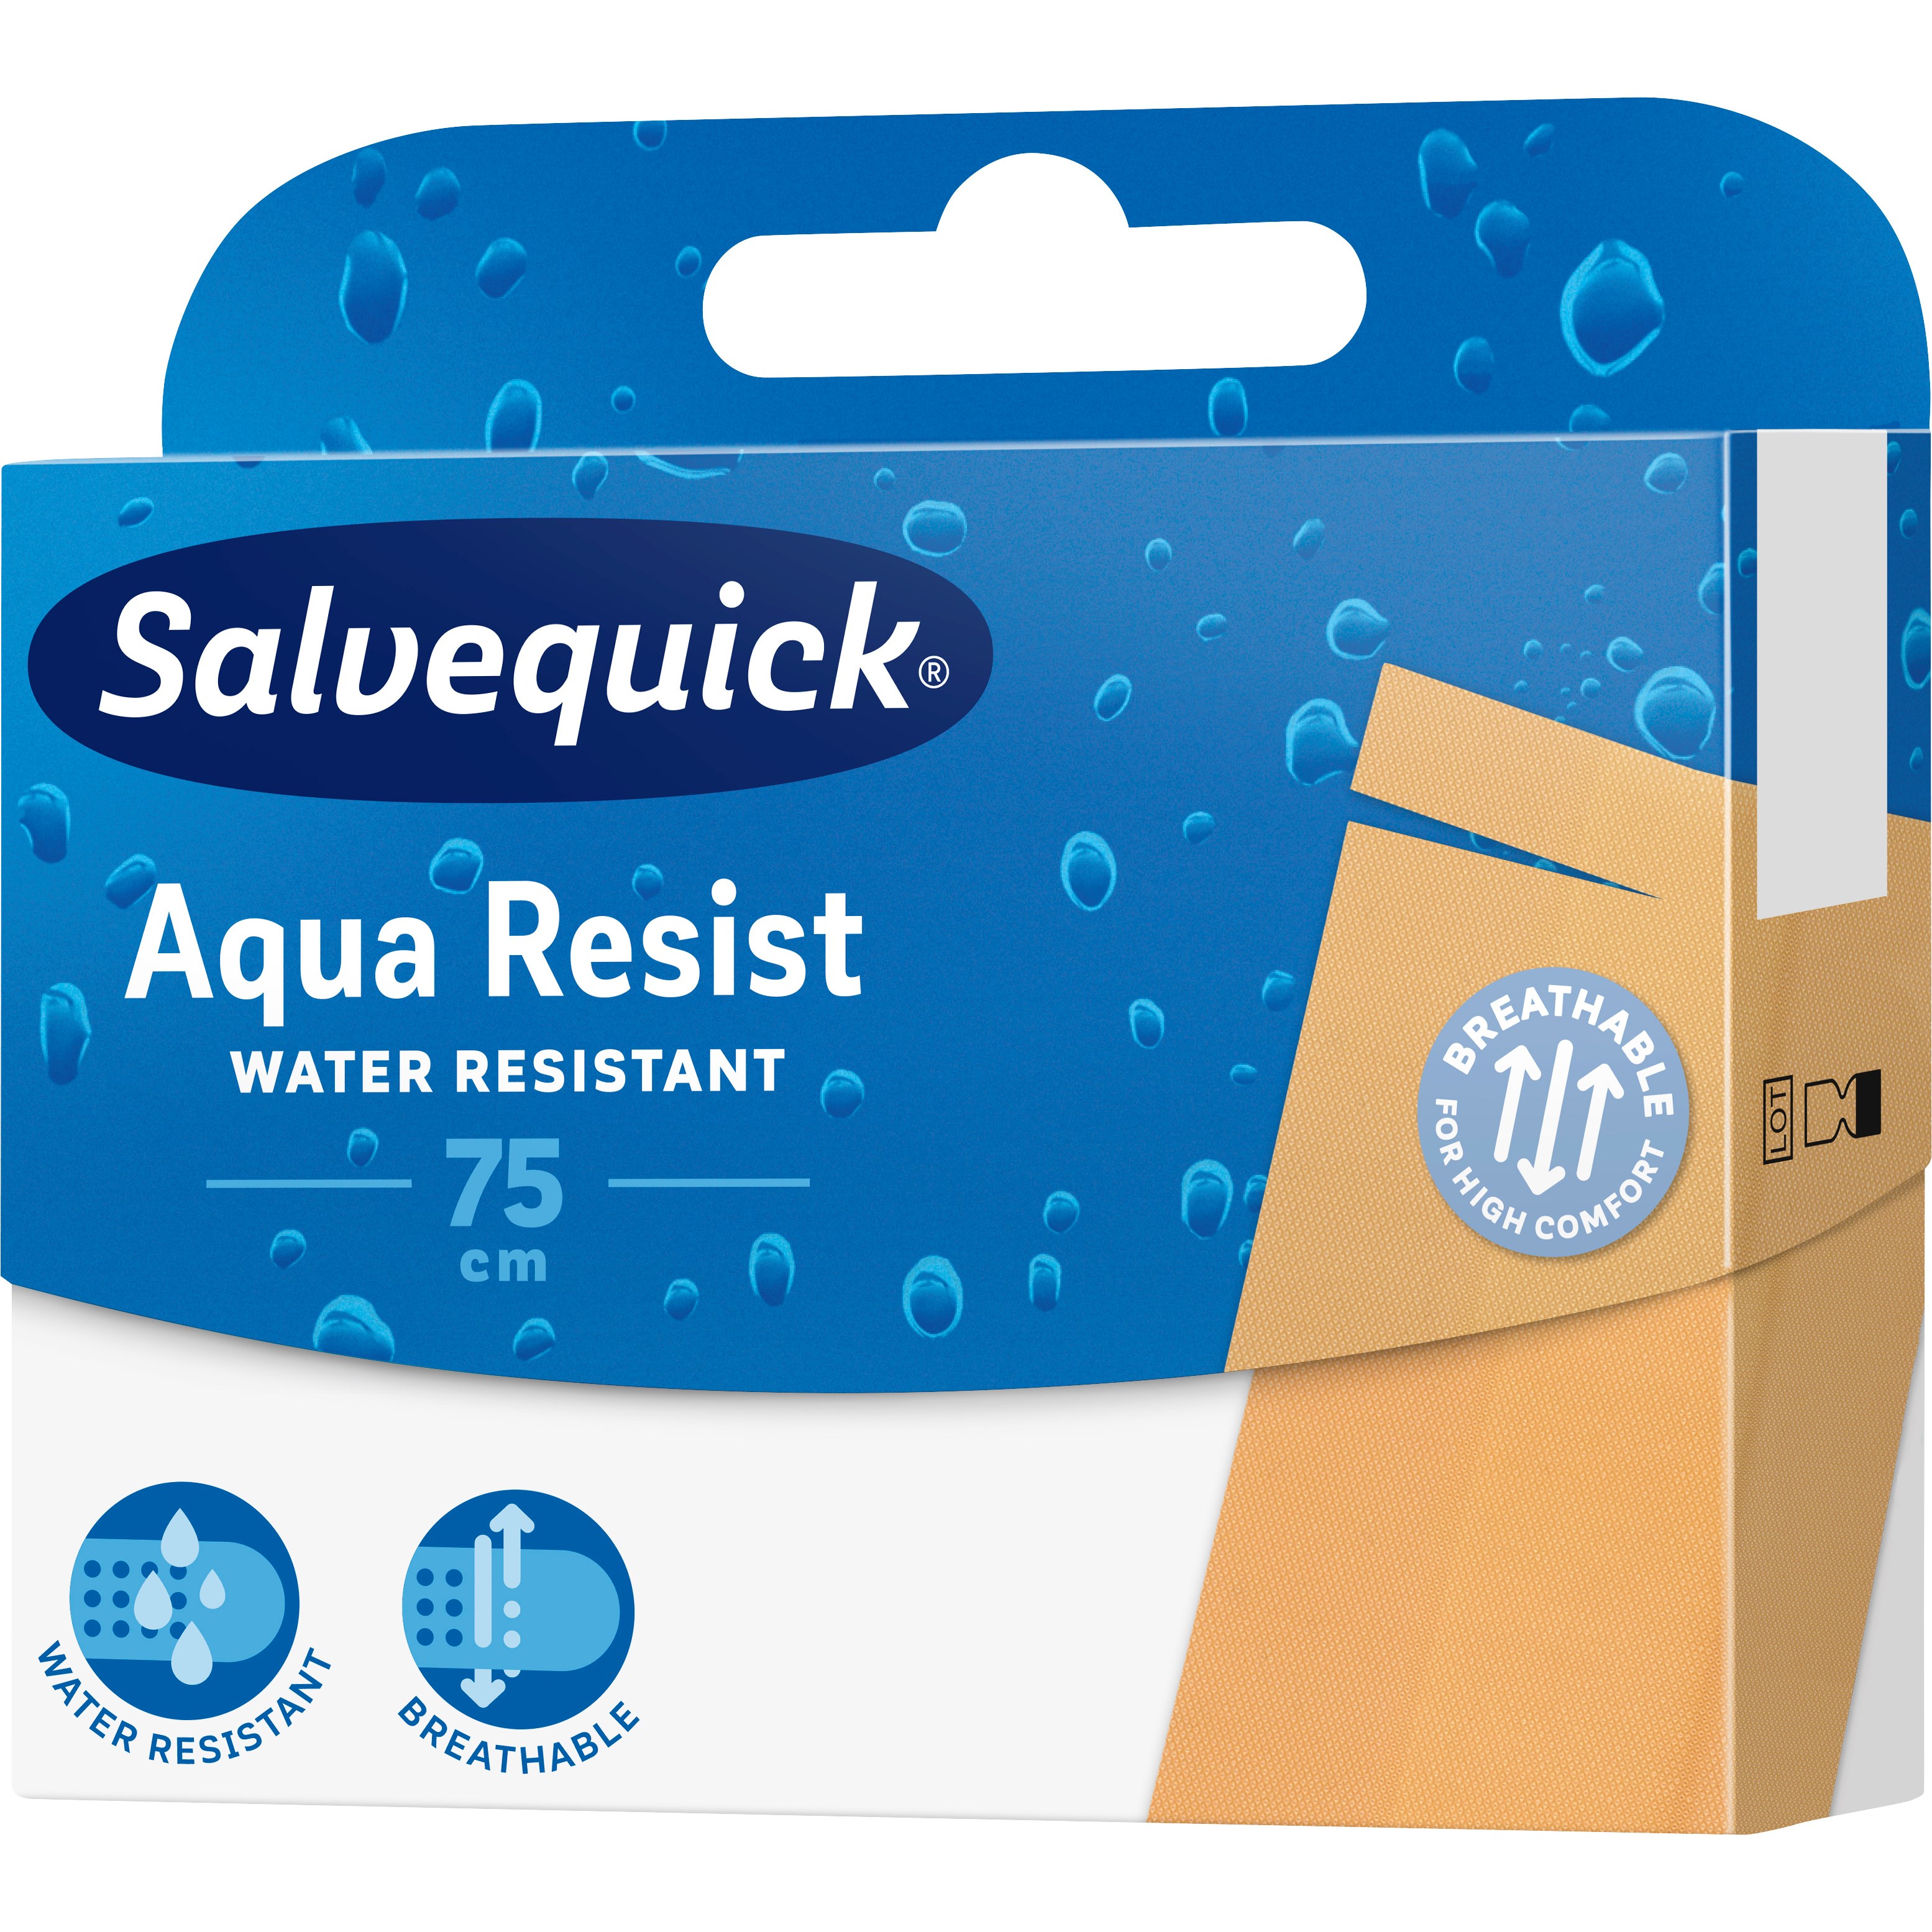 Salvequick Aqua Resist 75cm